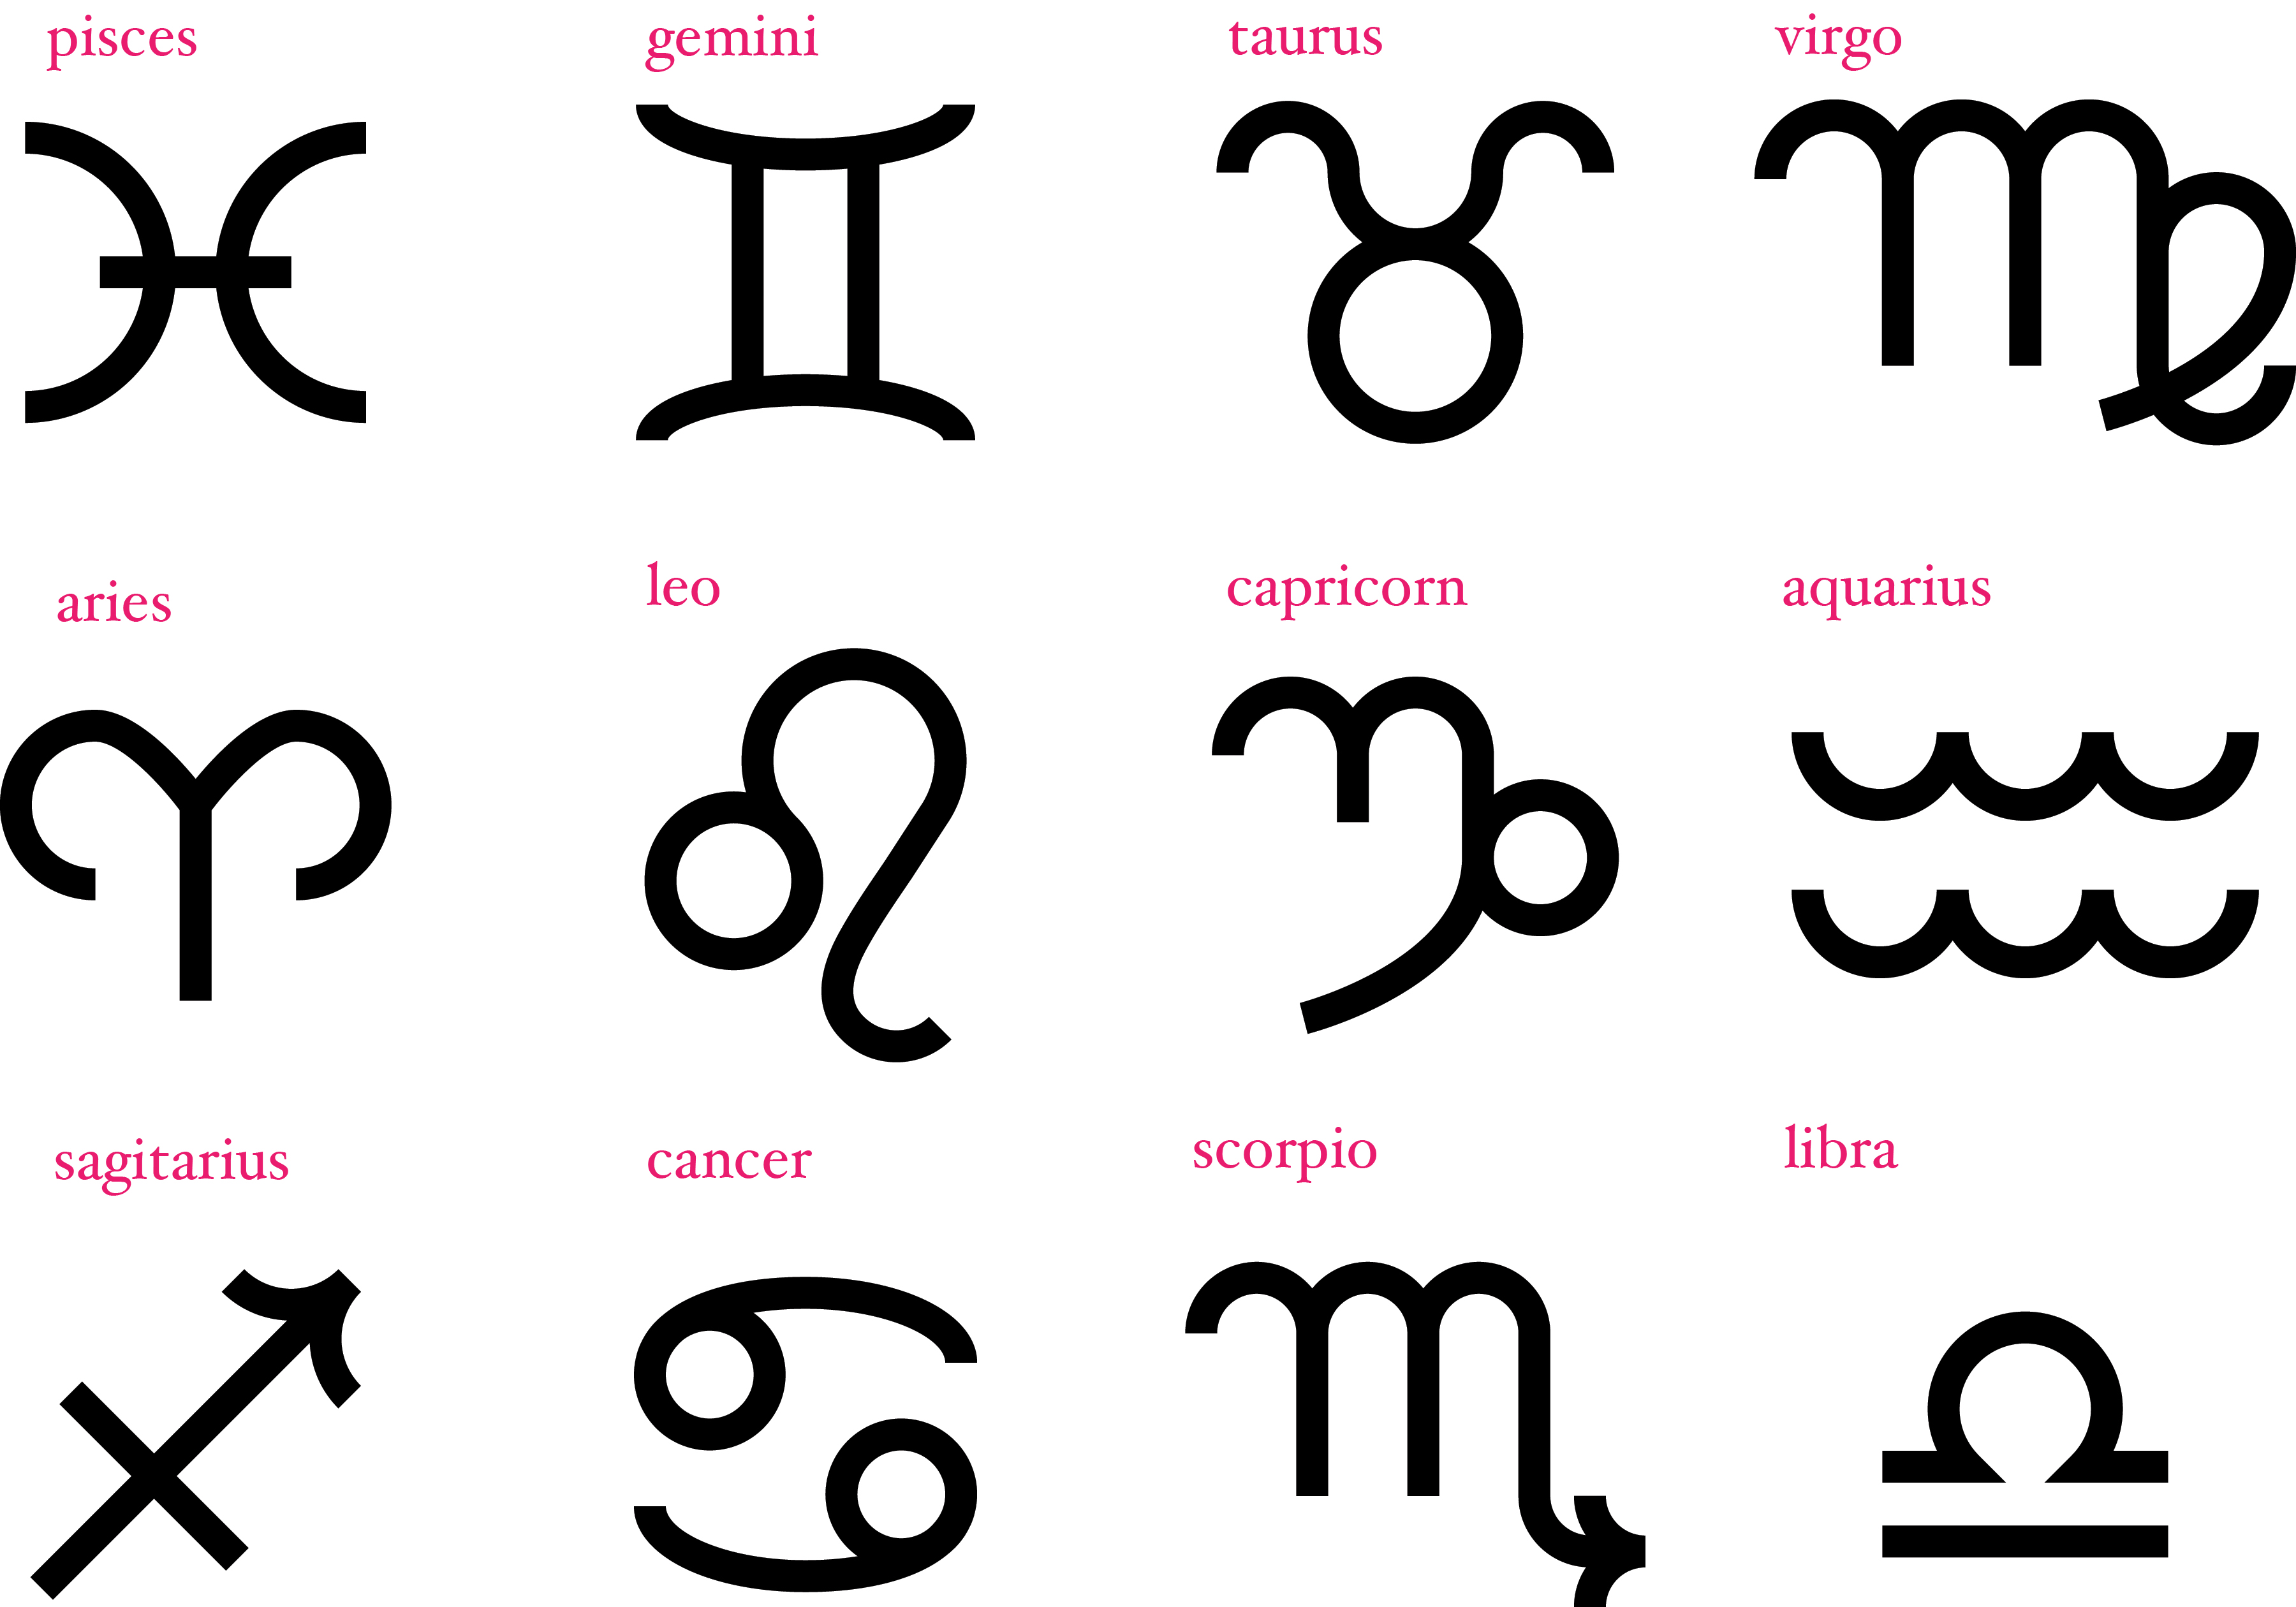 Astrology Star Sign Symbols - Reverasite